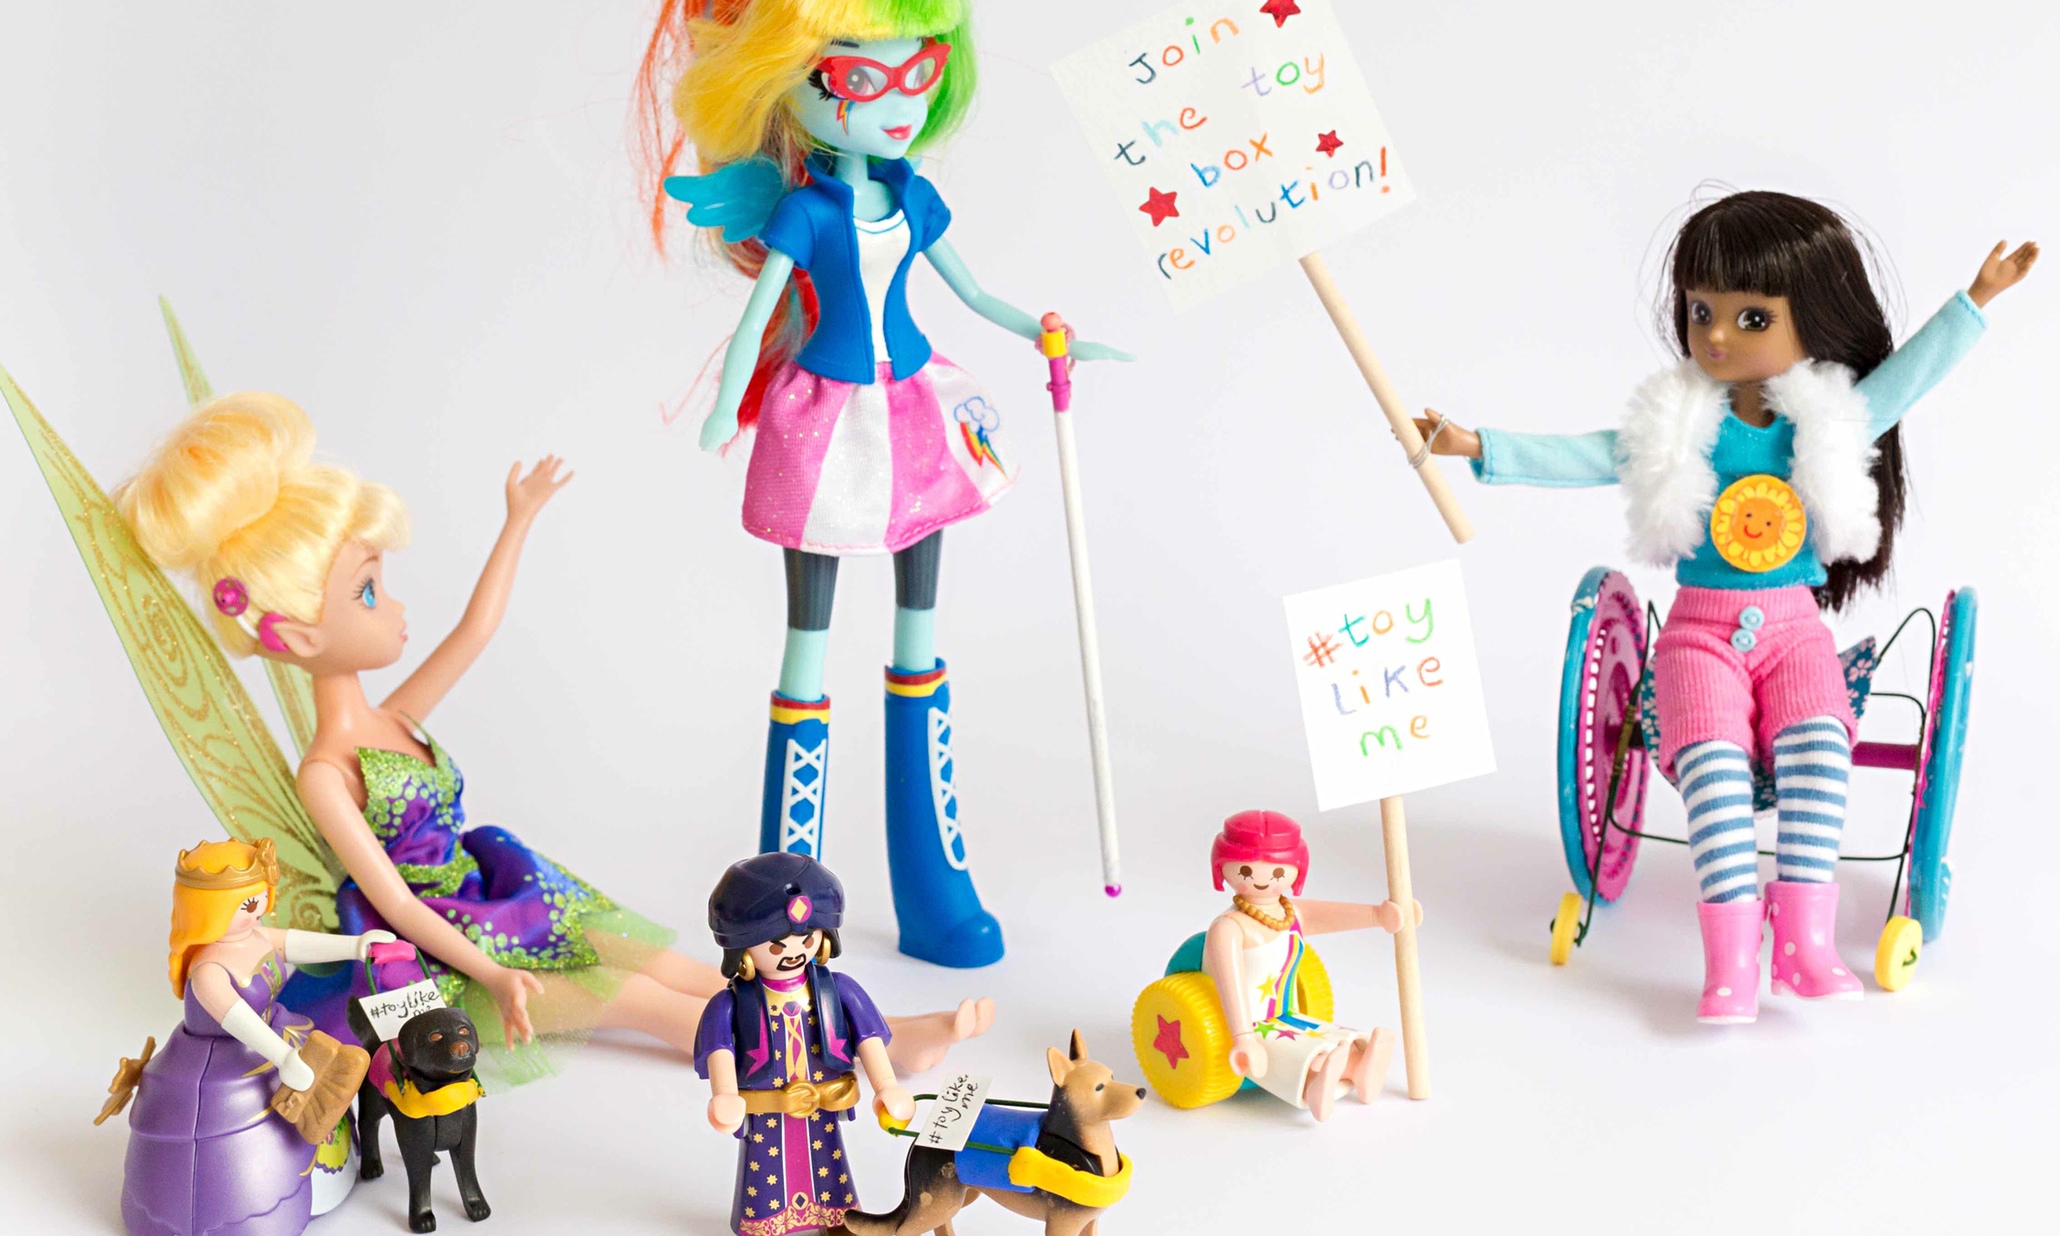 toylikeme, le prime bambole con disabilità